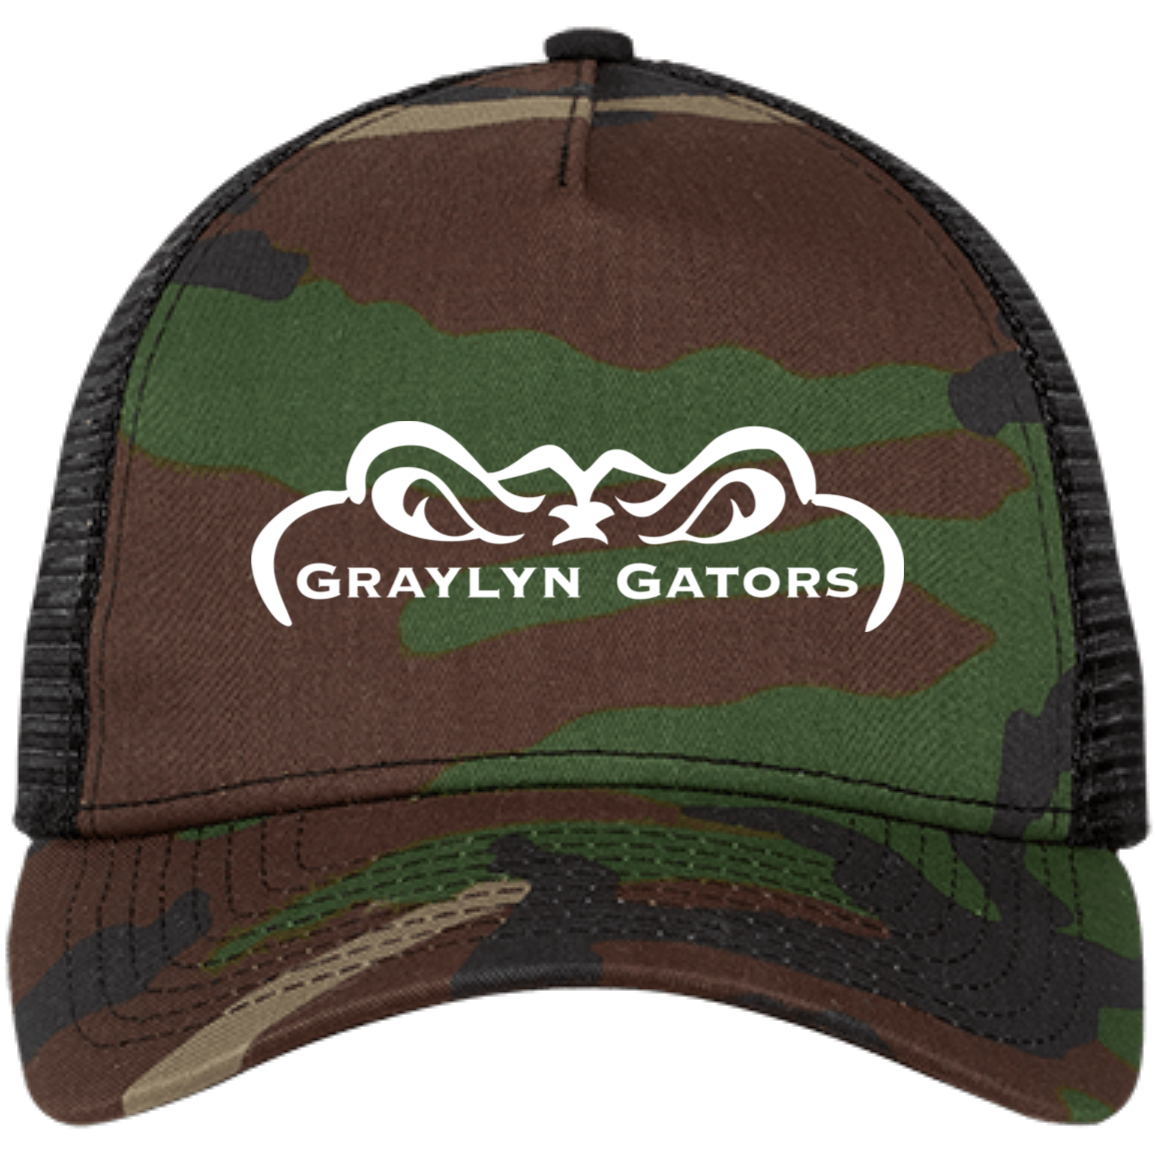 Gators Embroidered Snapback Trucker Cap